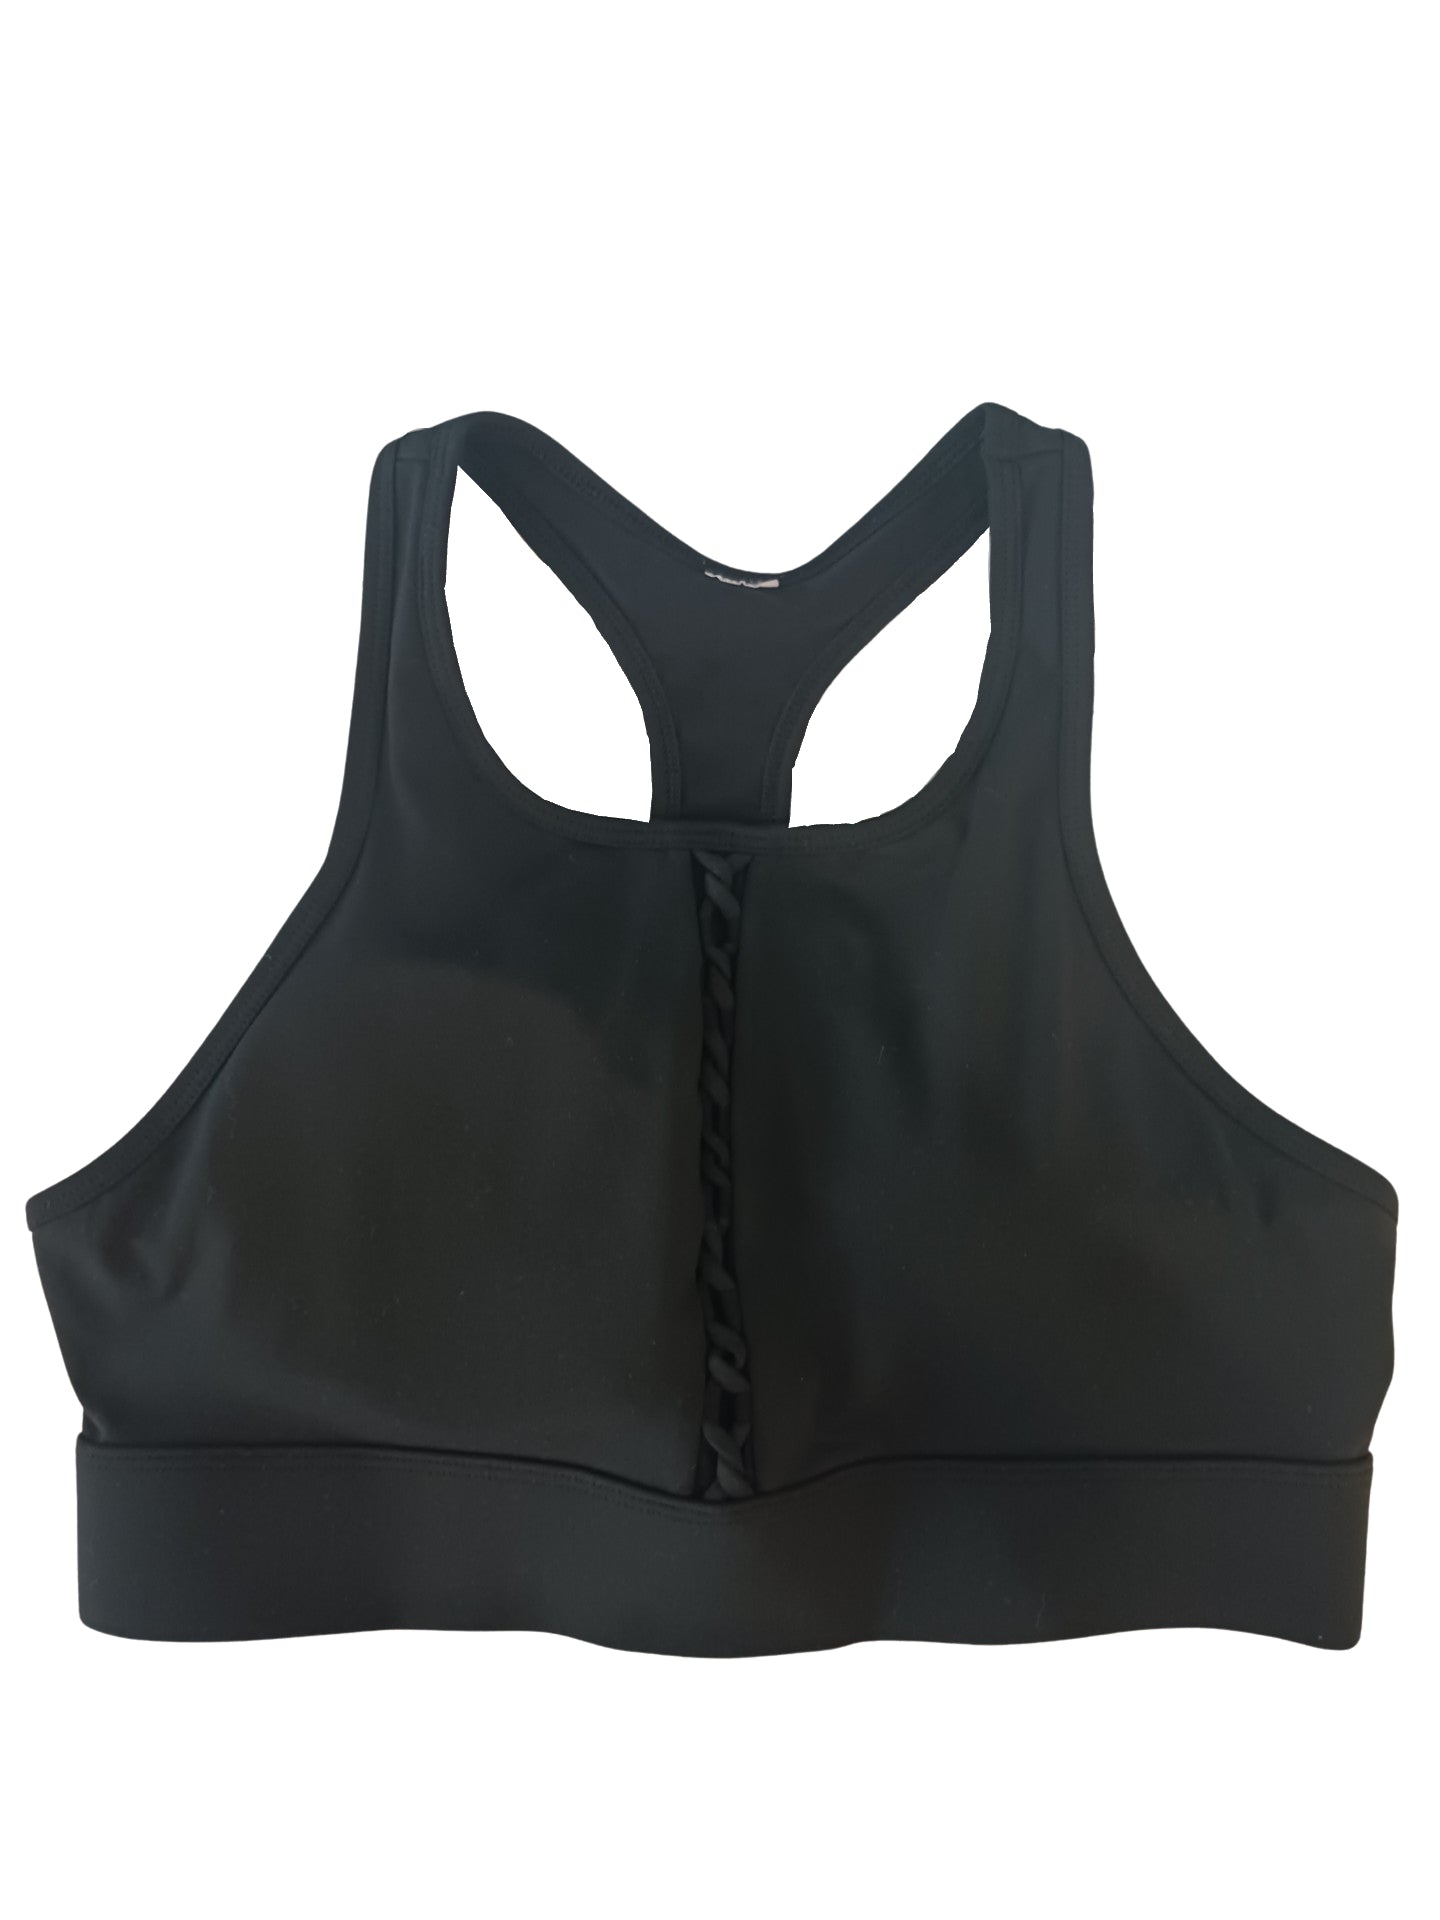 Fabletics Black Lace-Front Sports Bra, Size XL